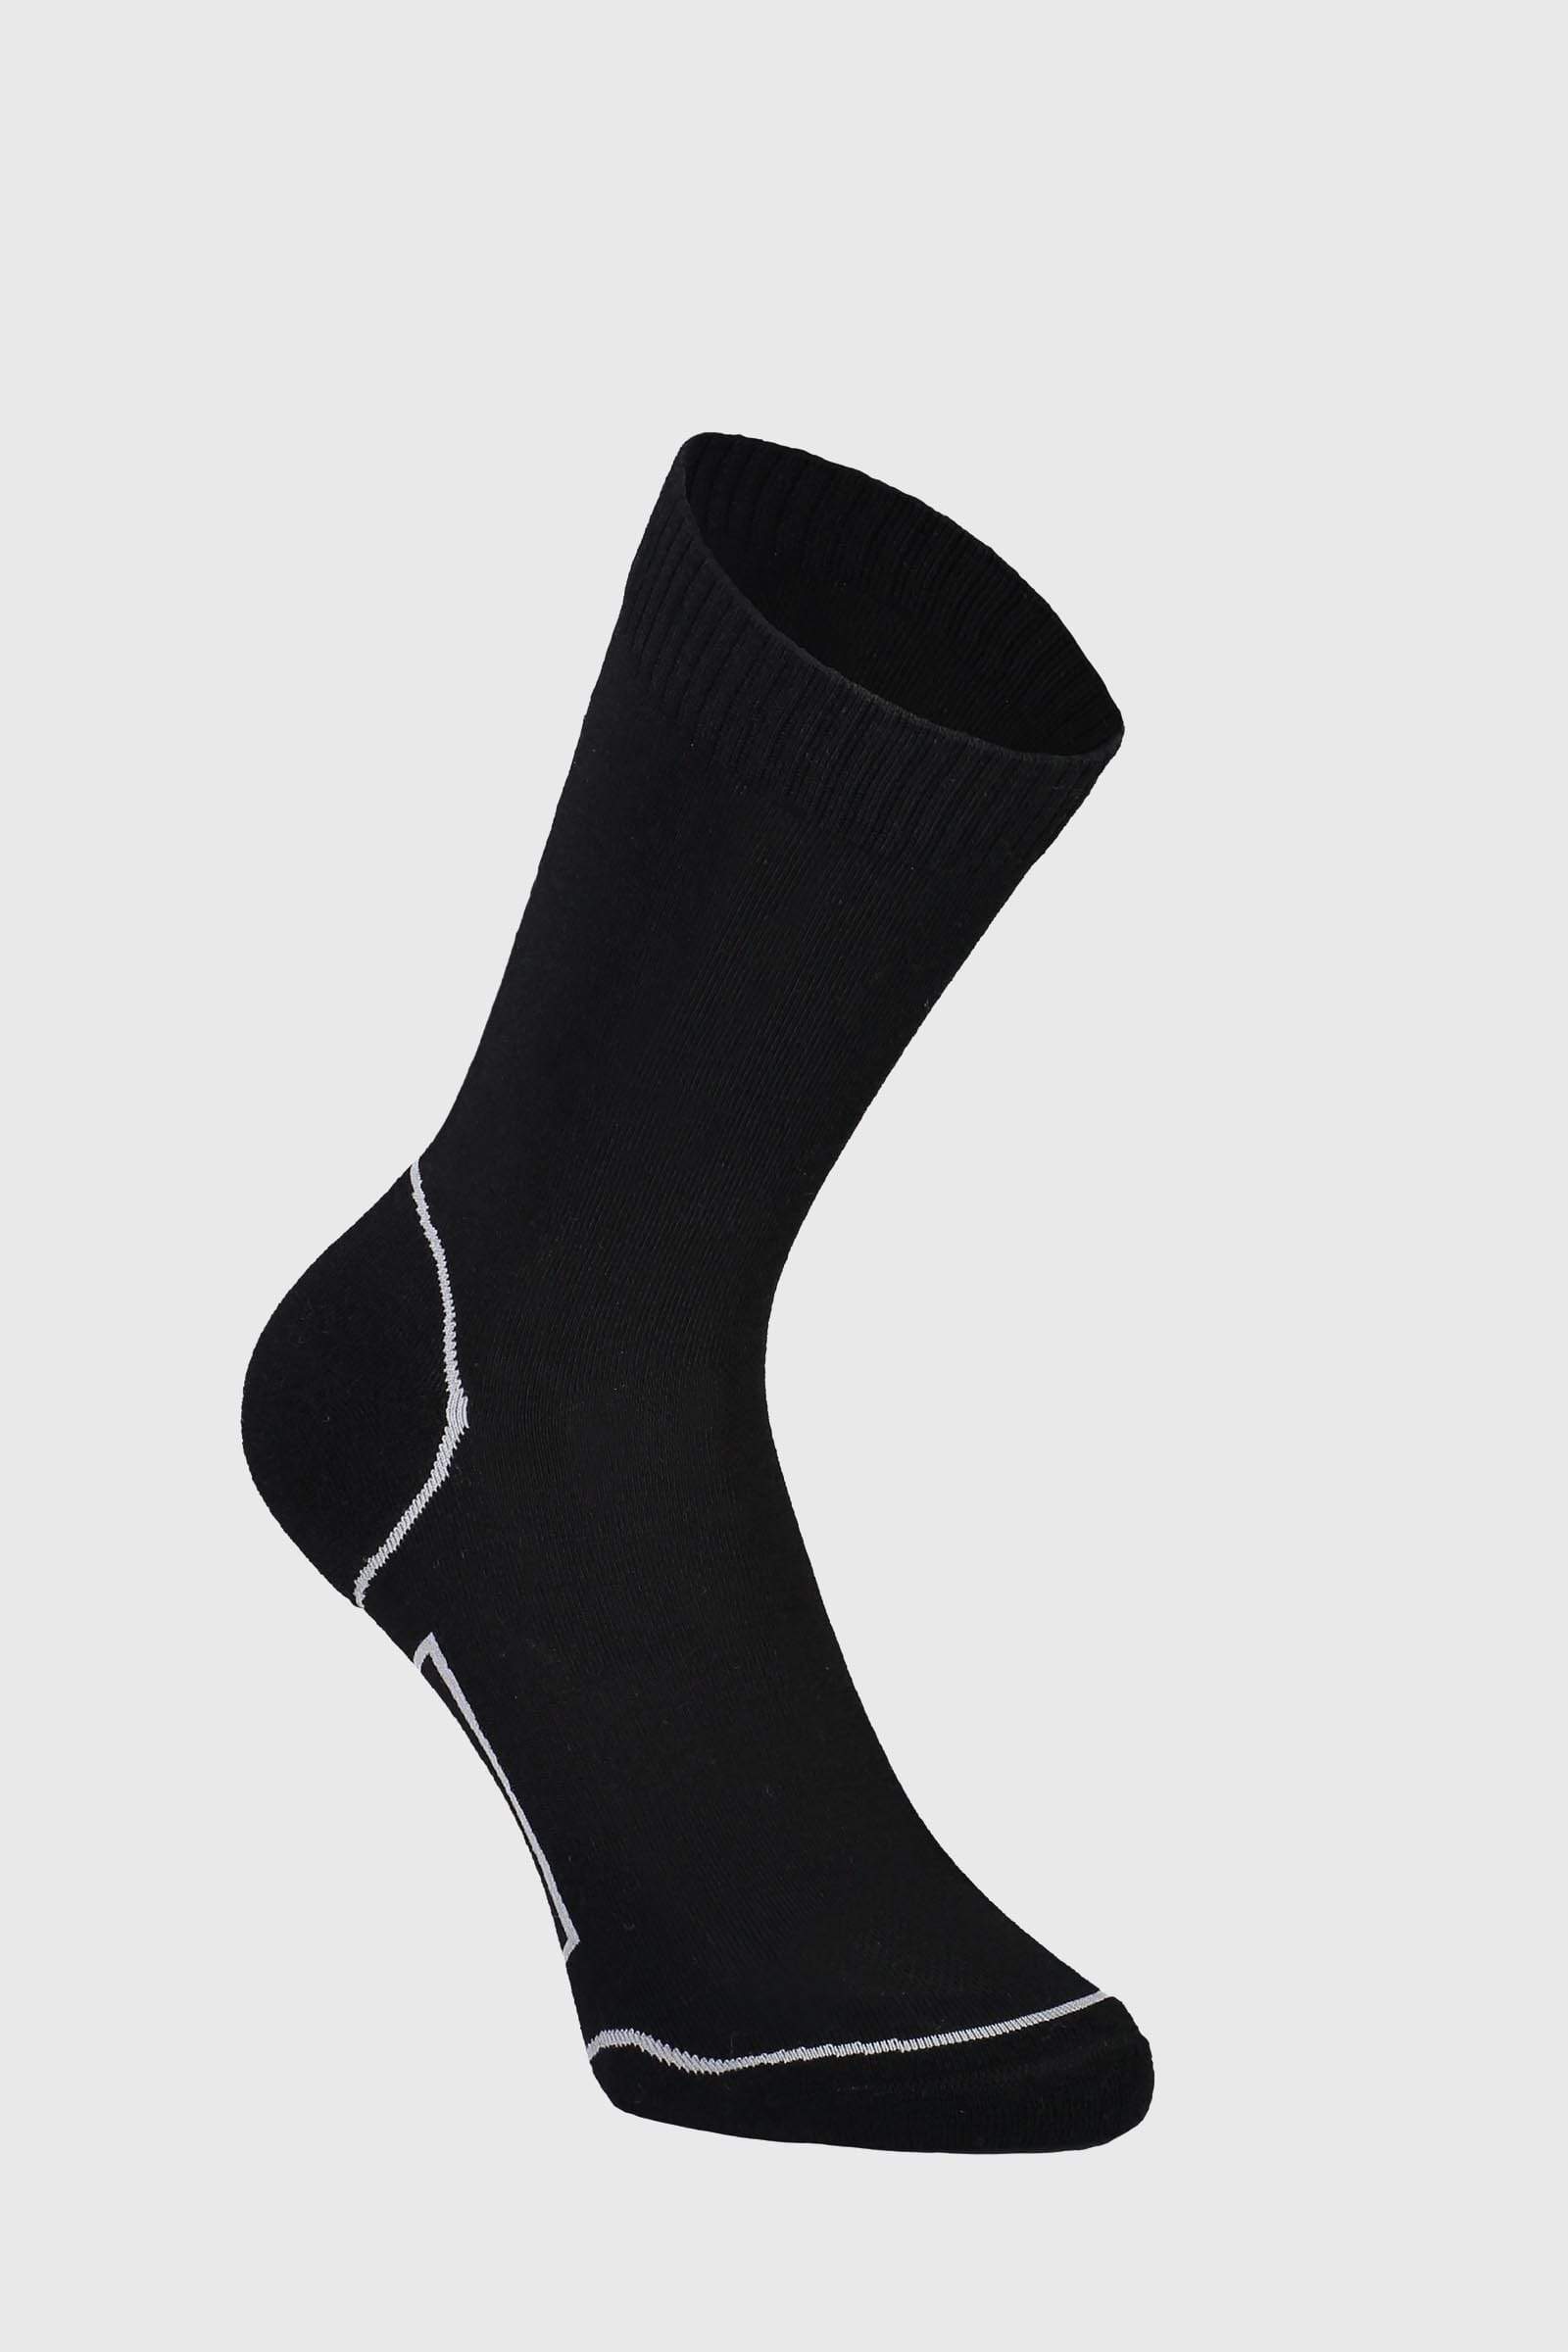 Mons Royale Unisex Tech Bike Sock 2.0 - Merino Wool, Black / Grey / 35-37